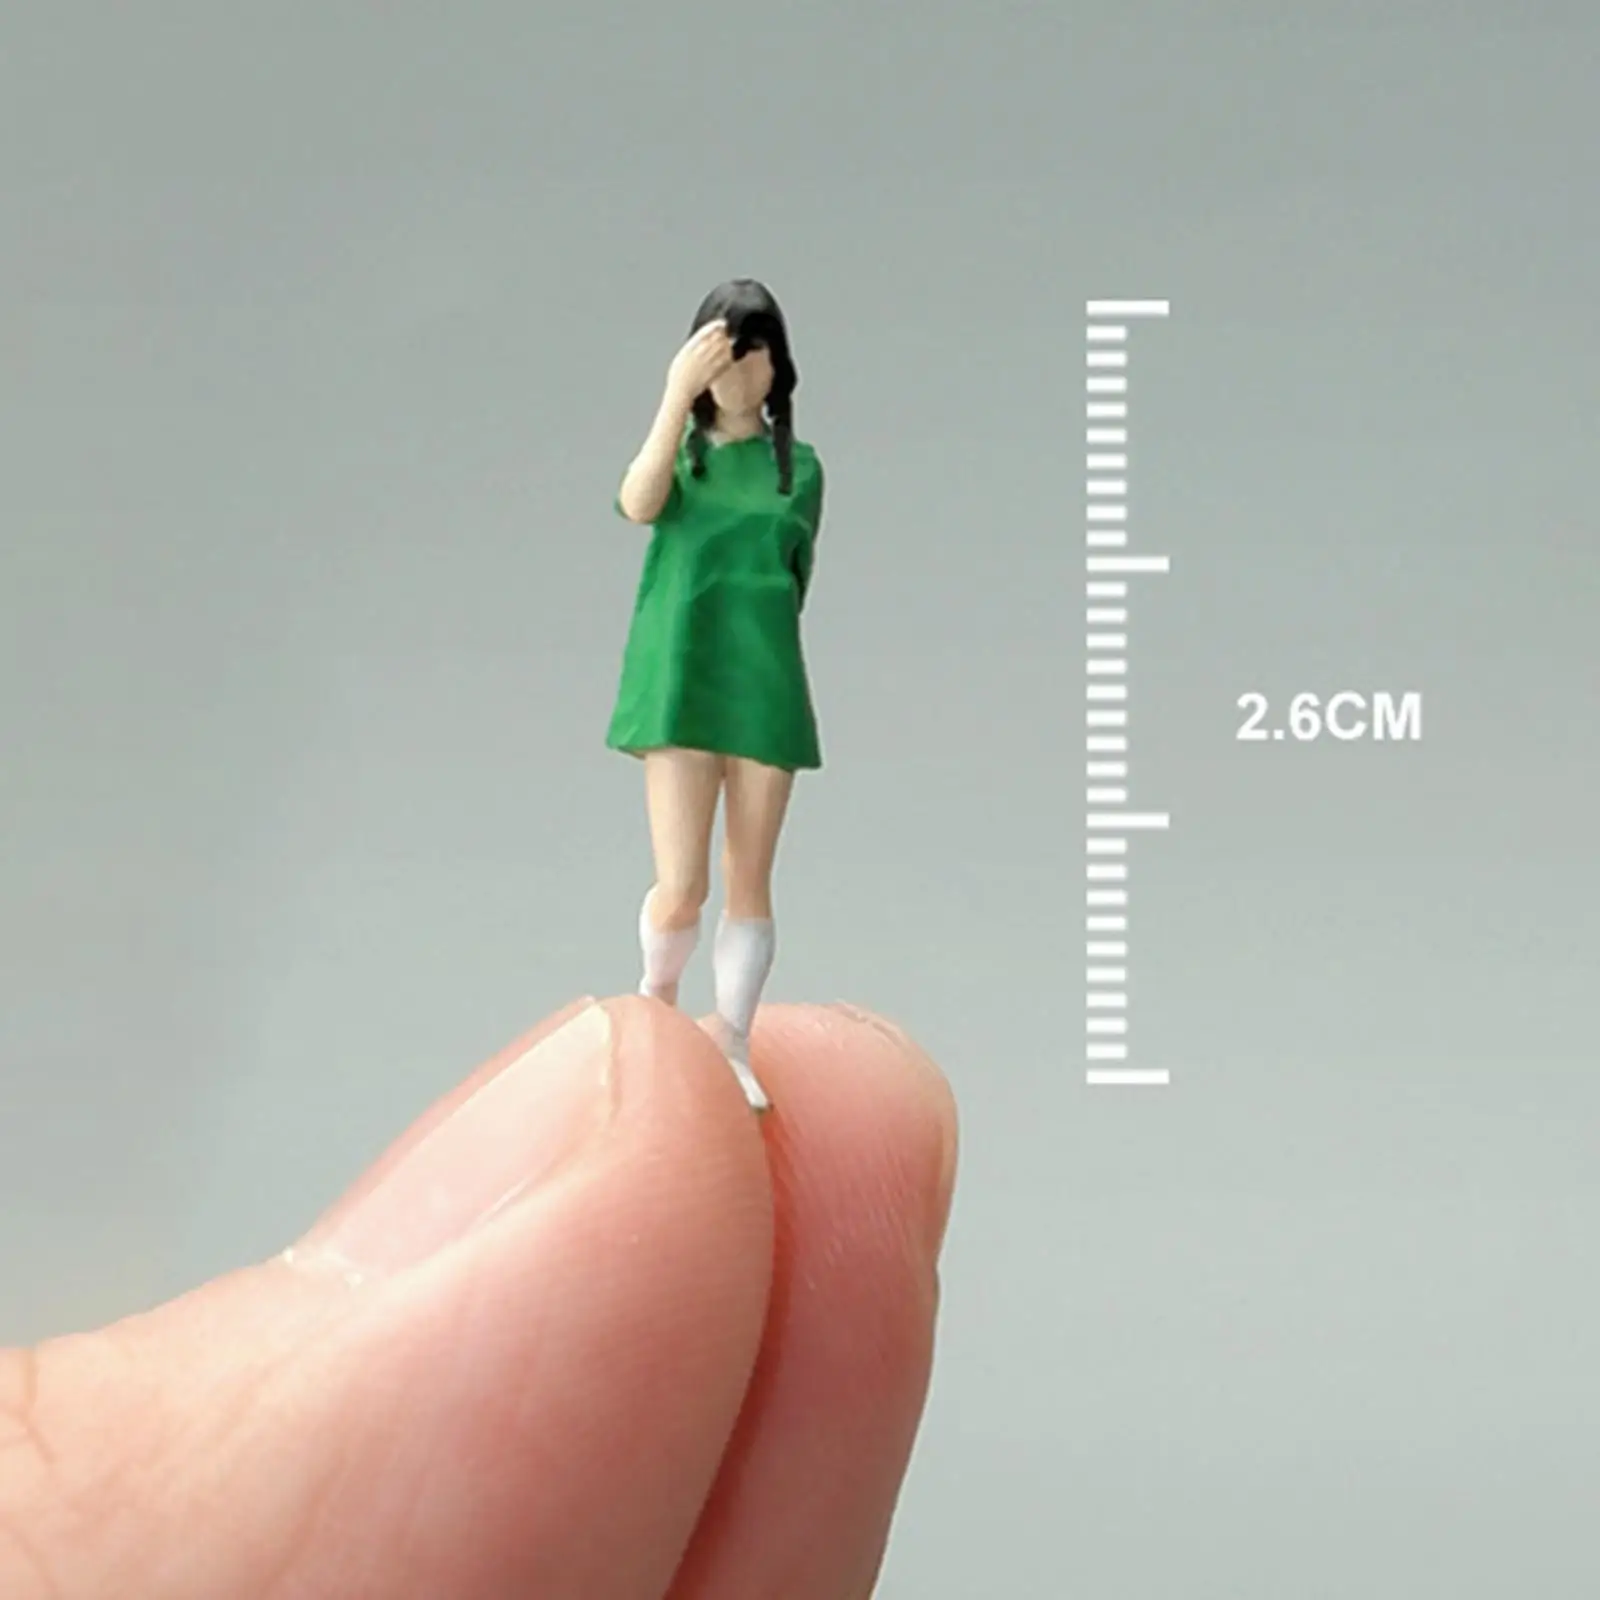 1/64 Diorama Figure Resin for Desktop Ornament Micro Landscape Model Trains